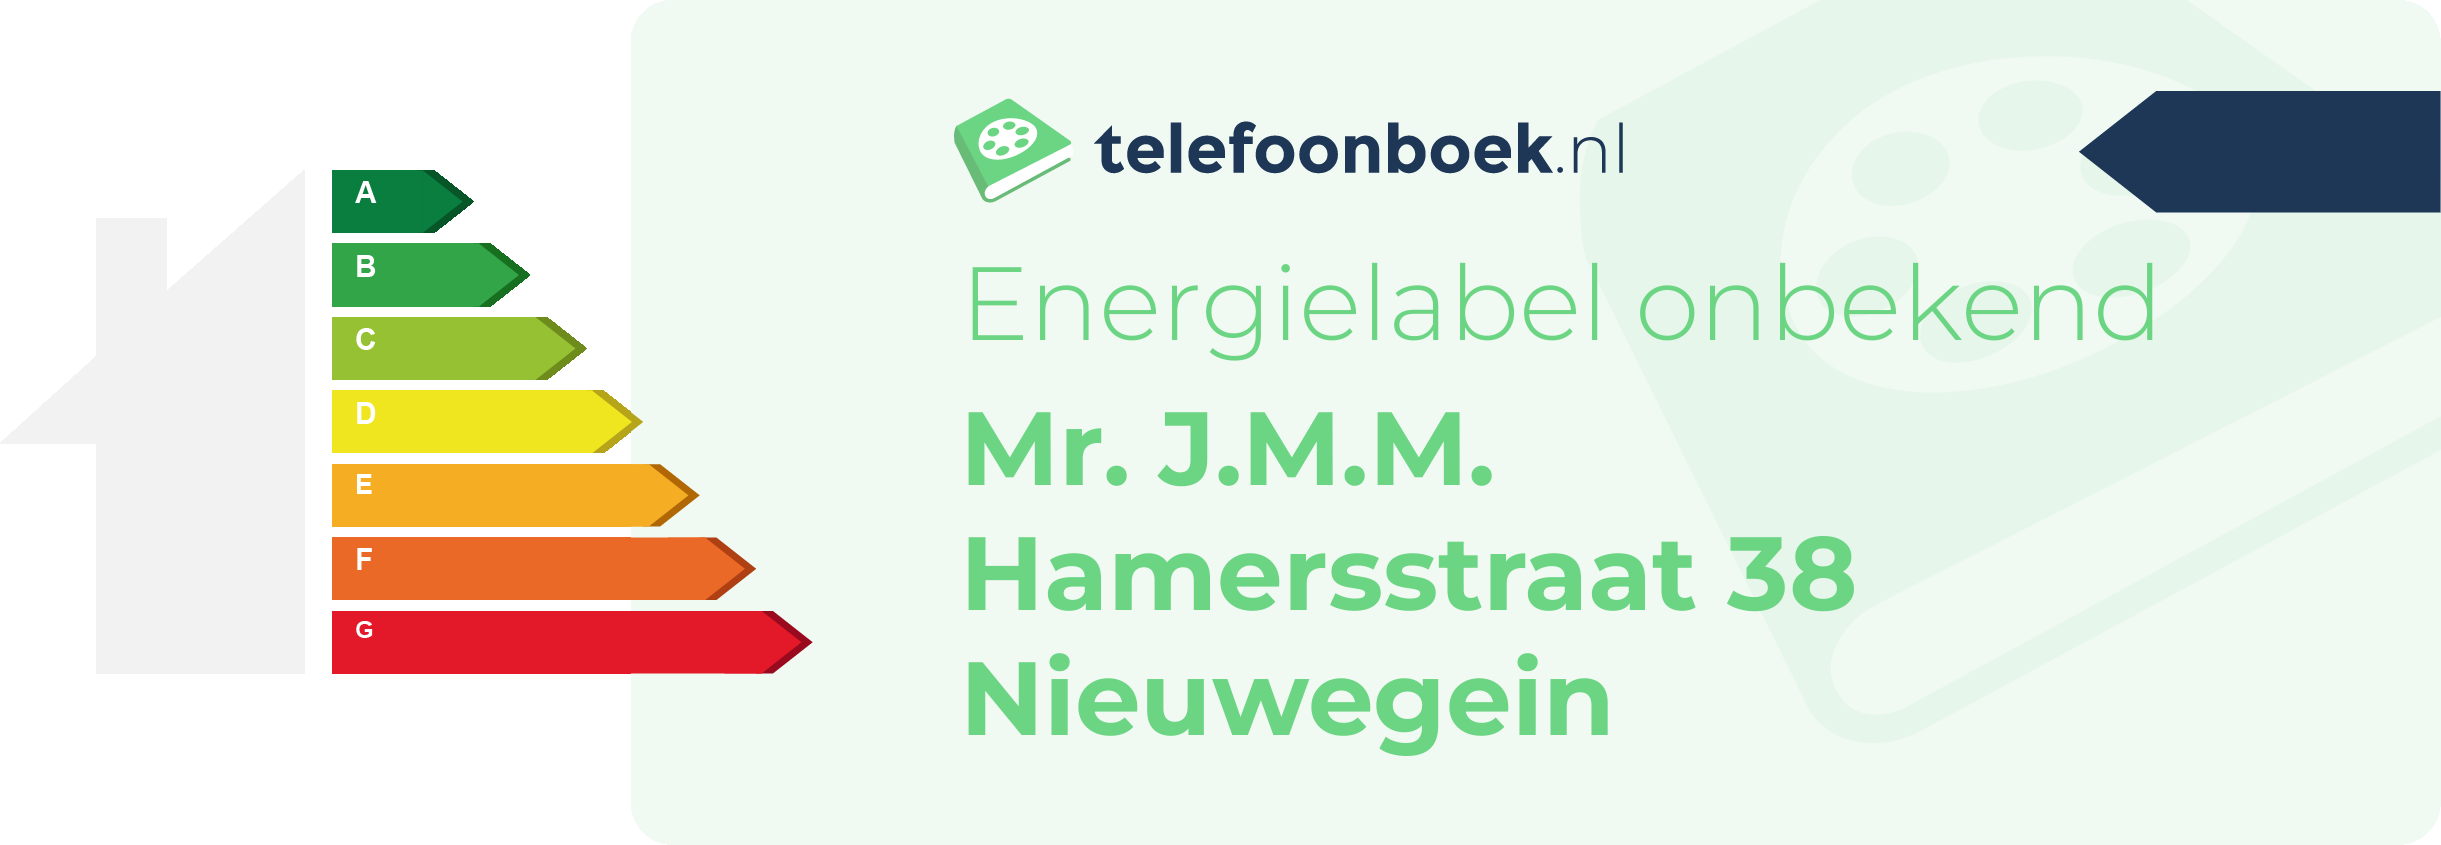 Energielabel Mr. J.M.M. Hamersstraat 38 Nieuwegein